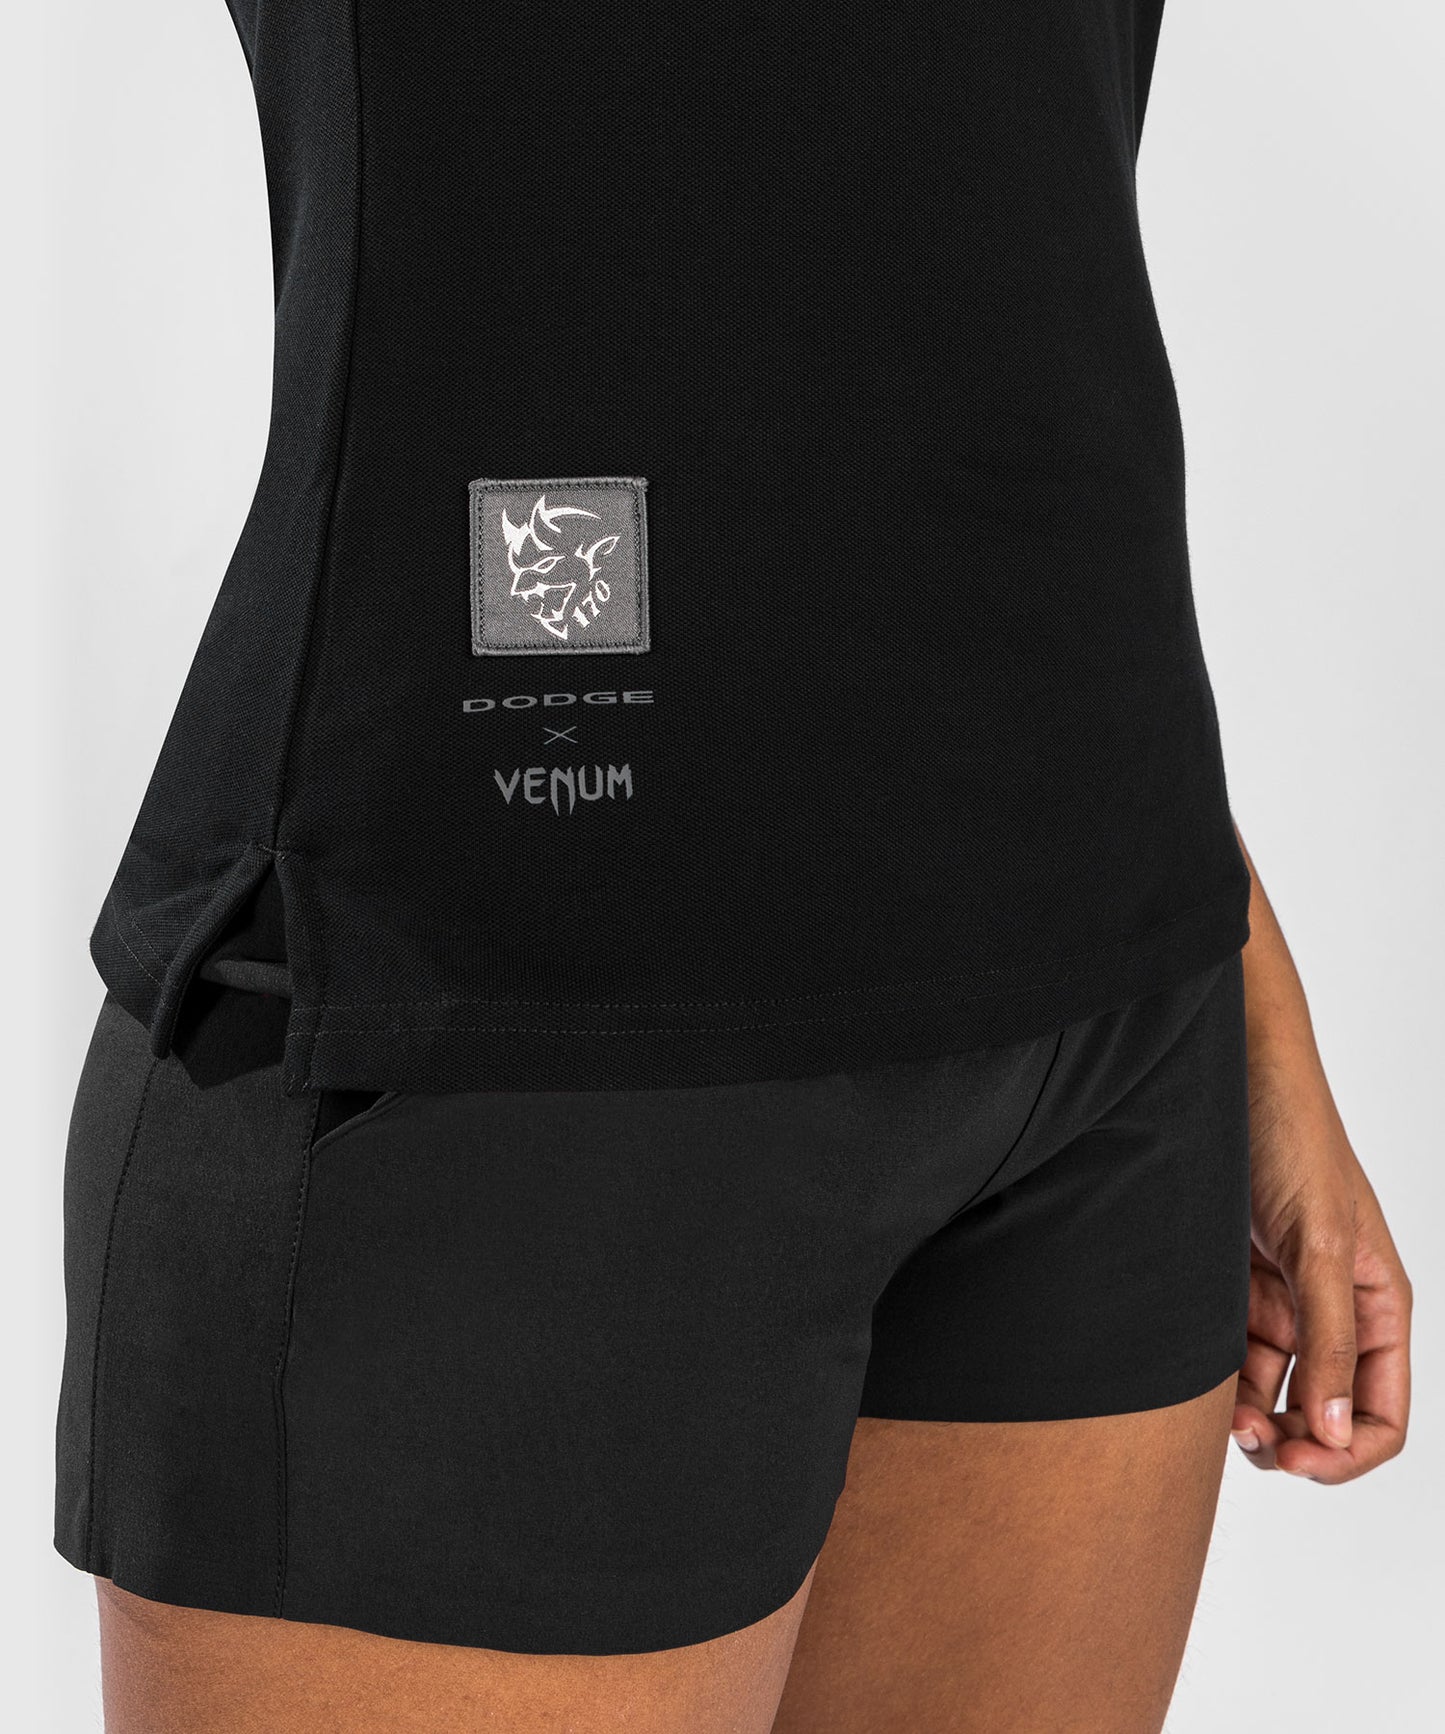 Venum x Dodge Demon 170 Women's Polo Shirt - Black